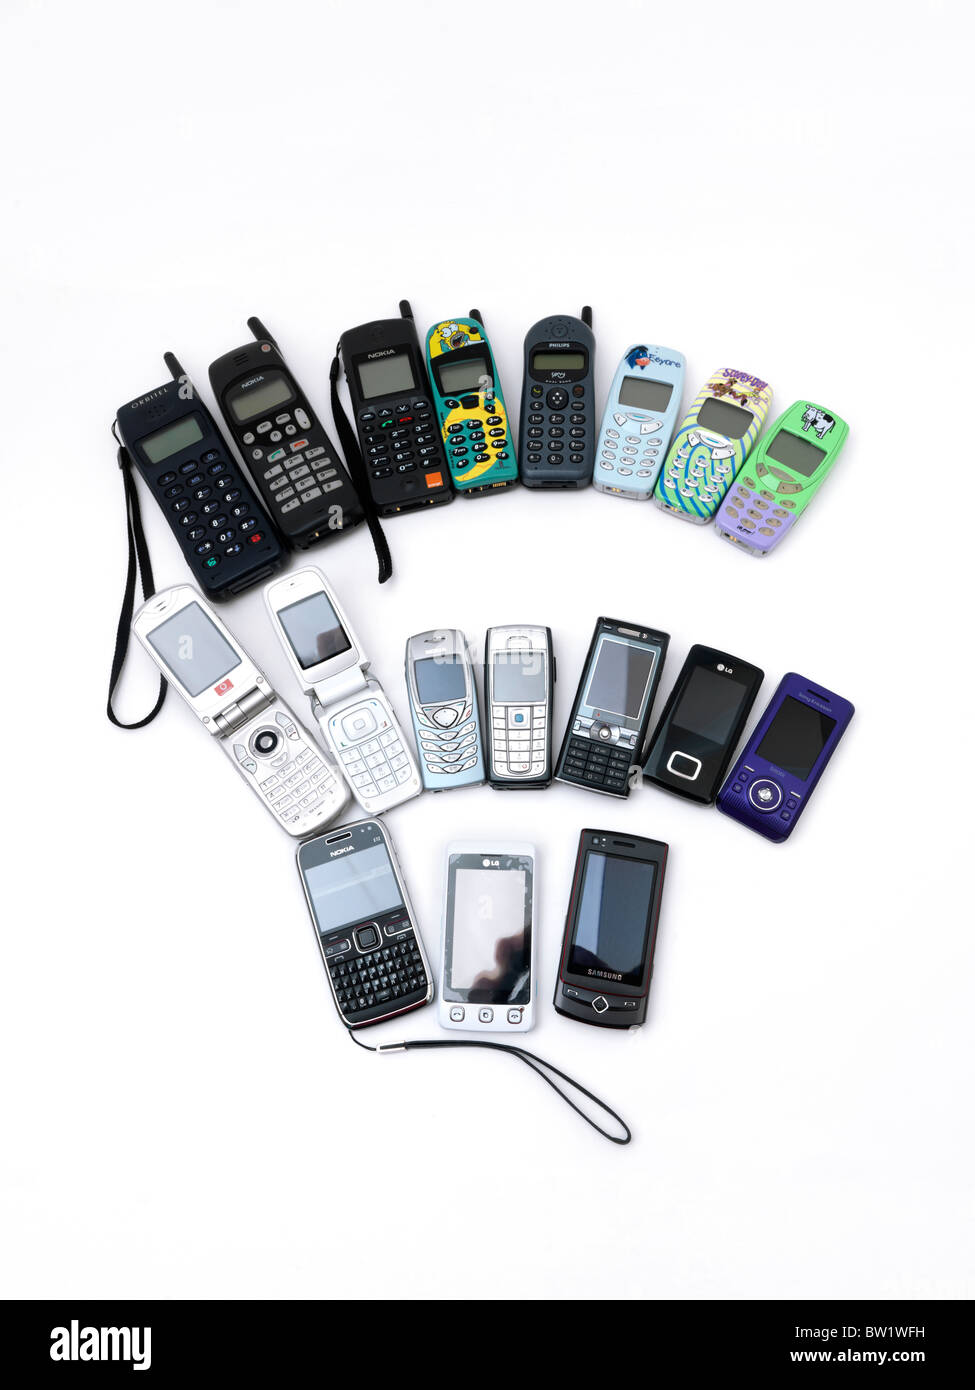 Alte und neue Handys aufgefächert, Nokia, LG, Samsung, Motorola, Phillips, SonyEricsson Stockfoto